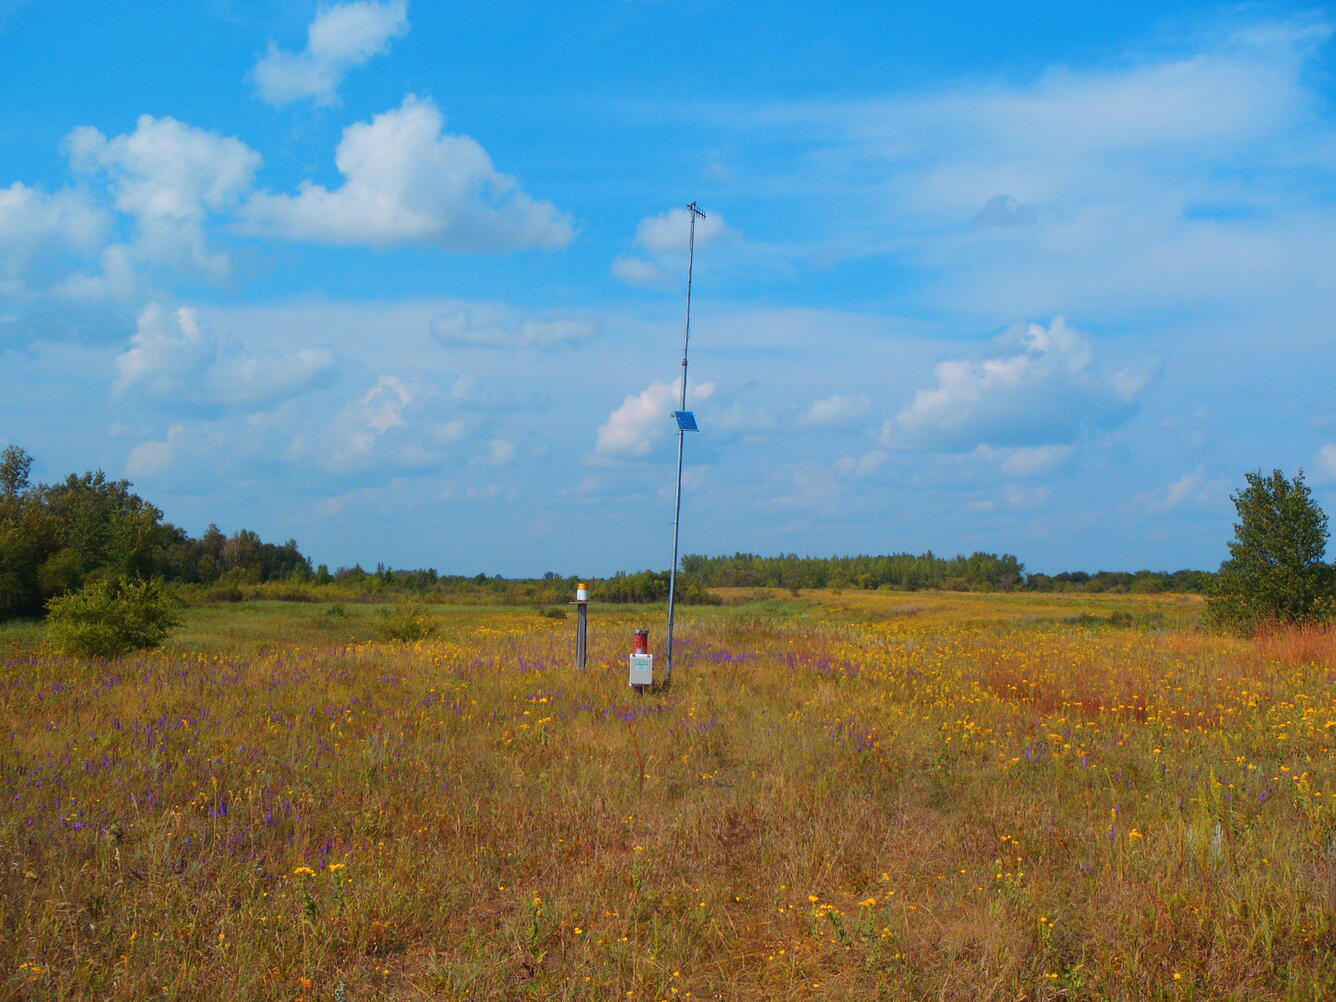 USGS Monitoring Well - Wetland and Prairie Restoration Hydrology Study Glacial Ridge National Wildlife Refuge, Mentor, MN